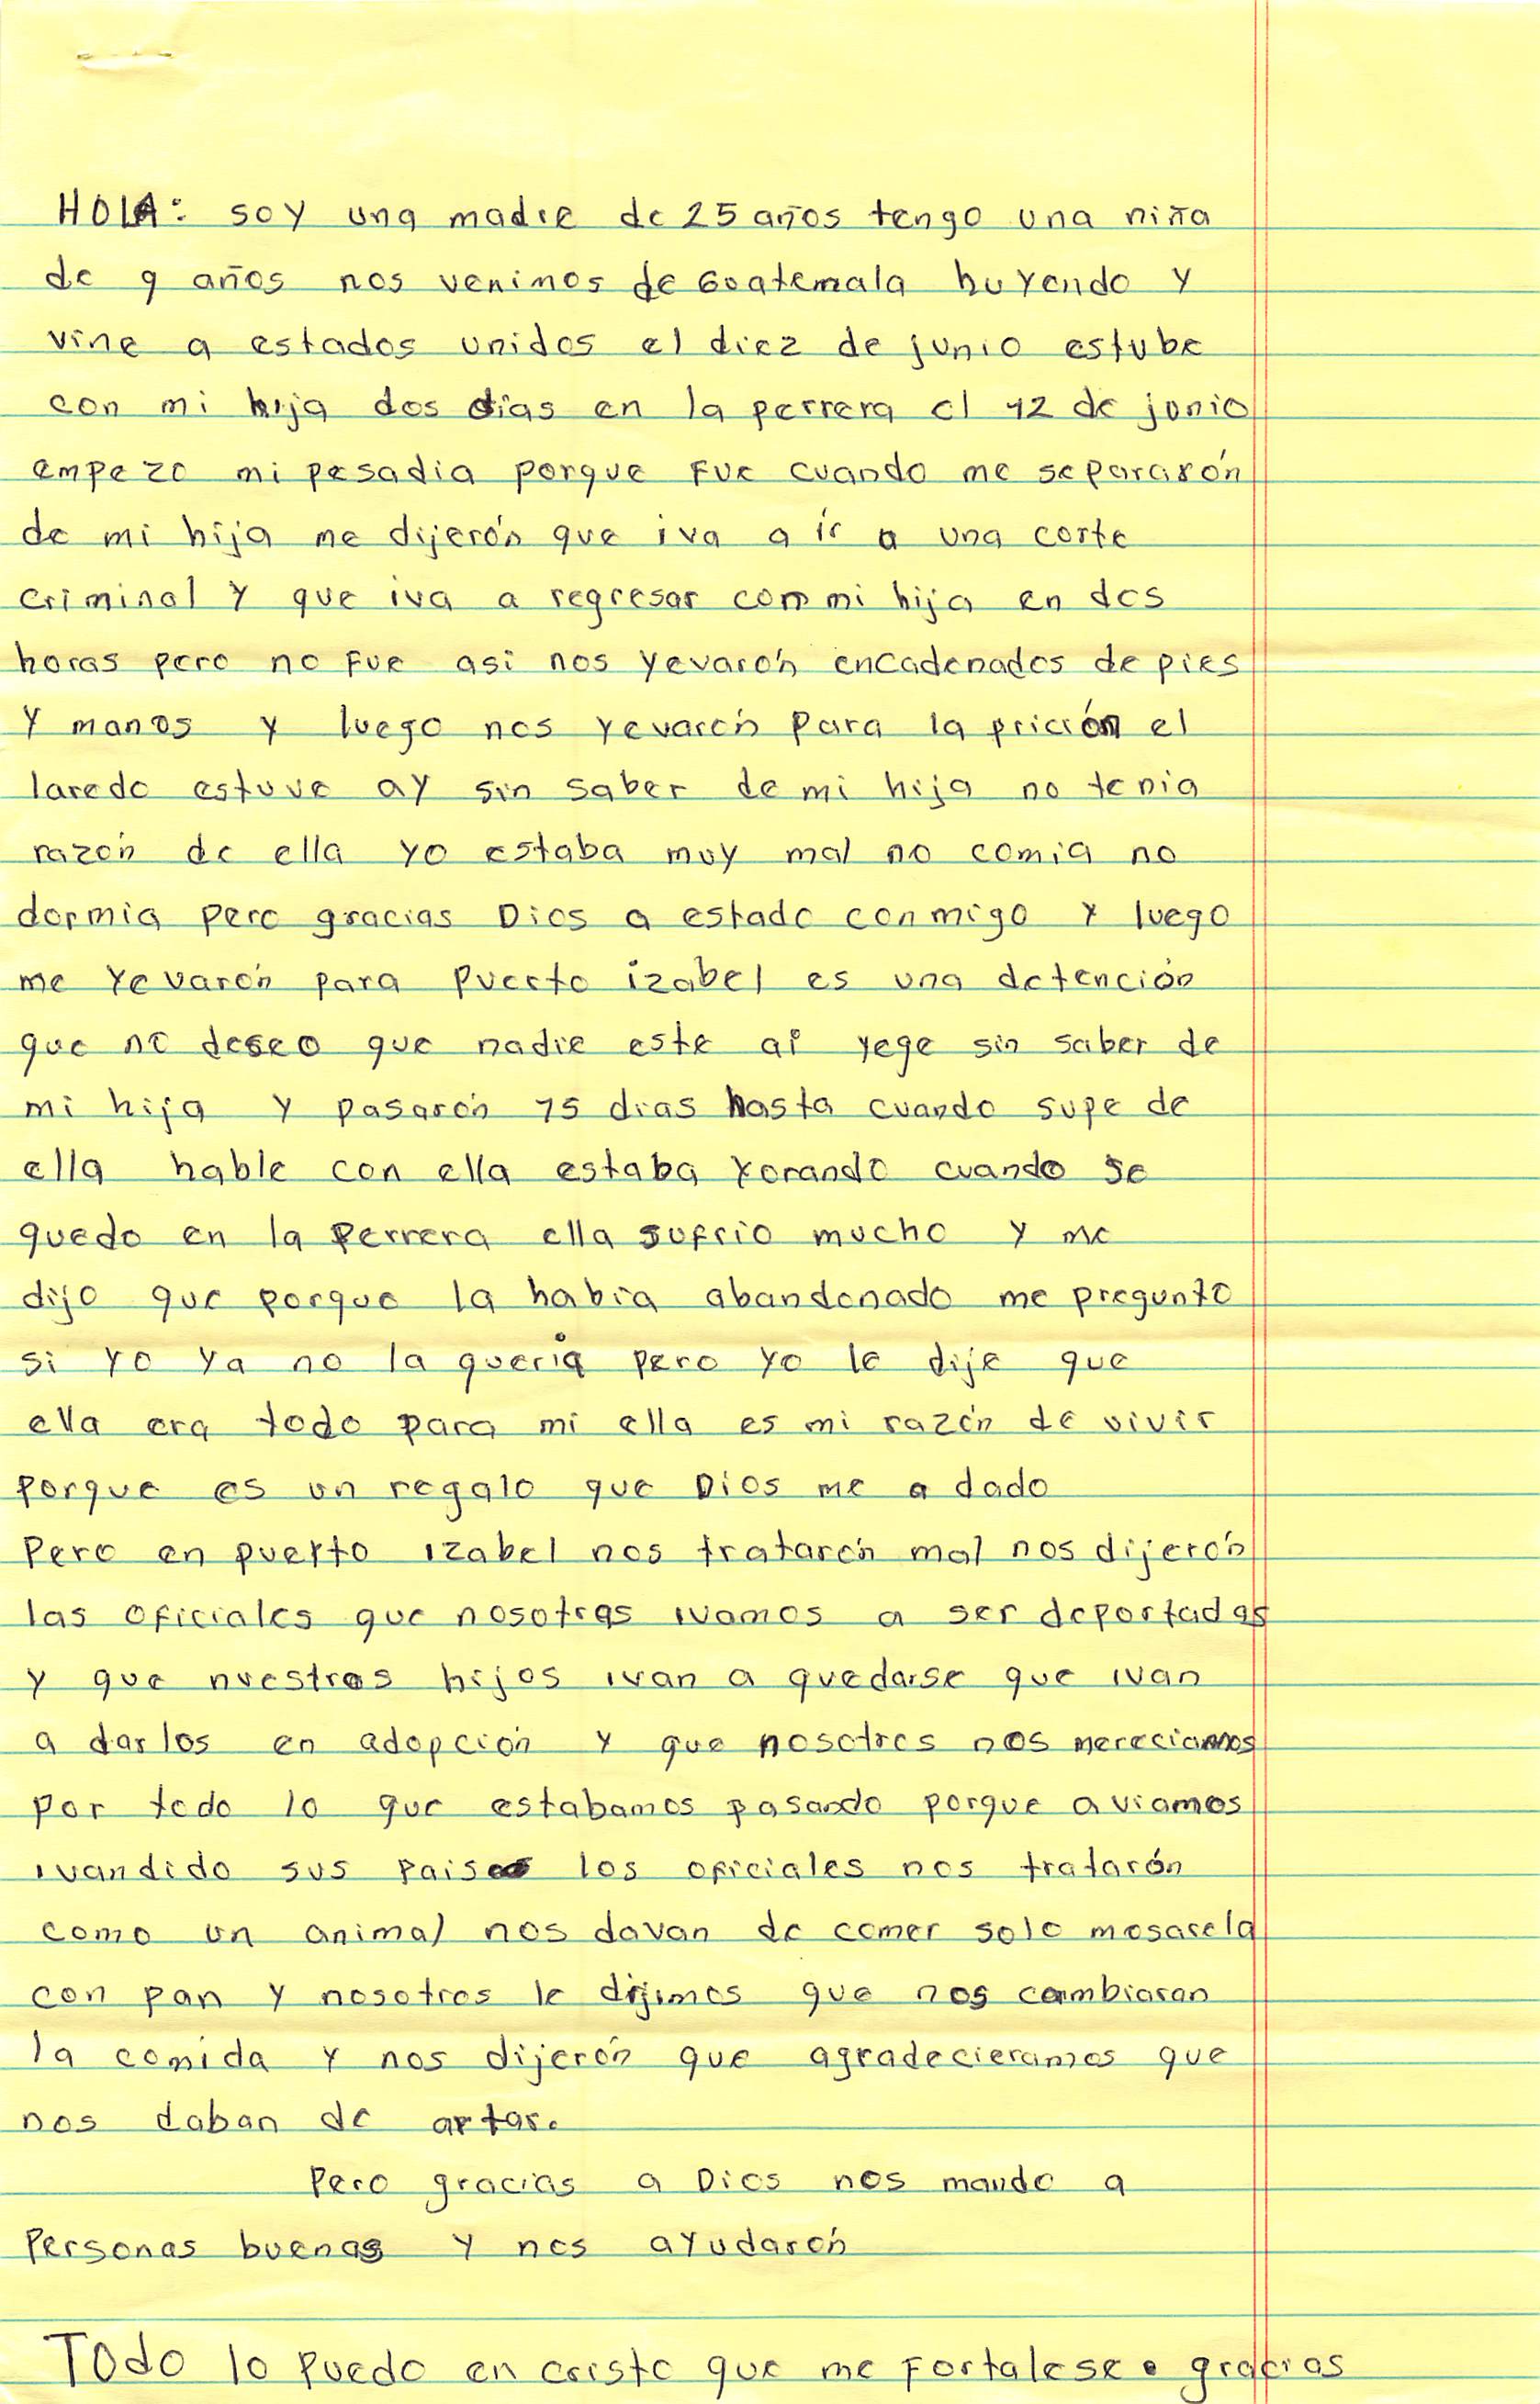 Alma's Handwritten Letter Part 1